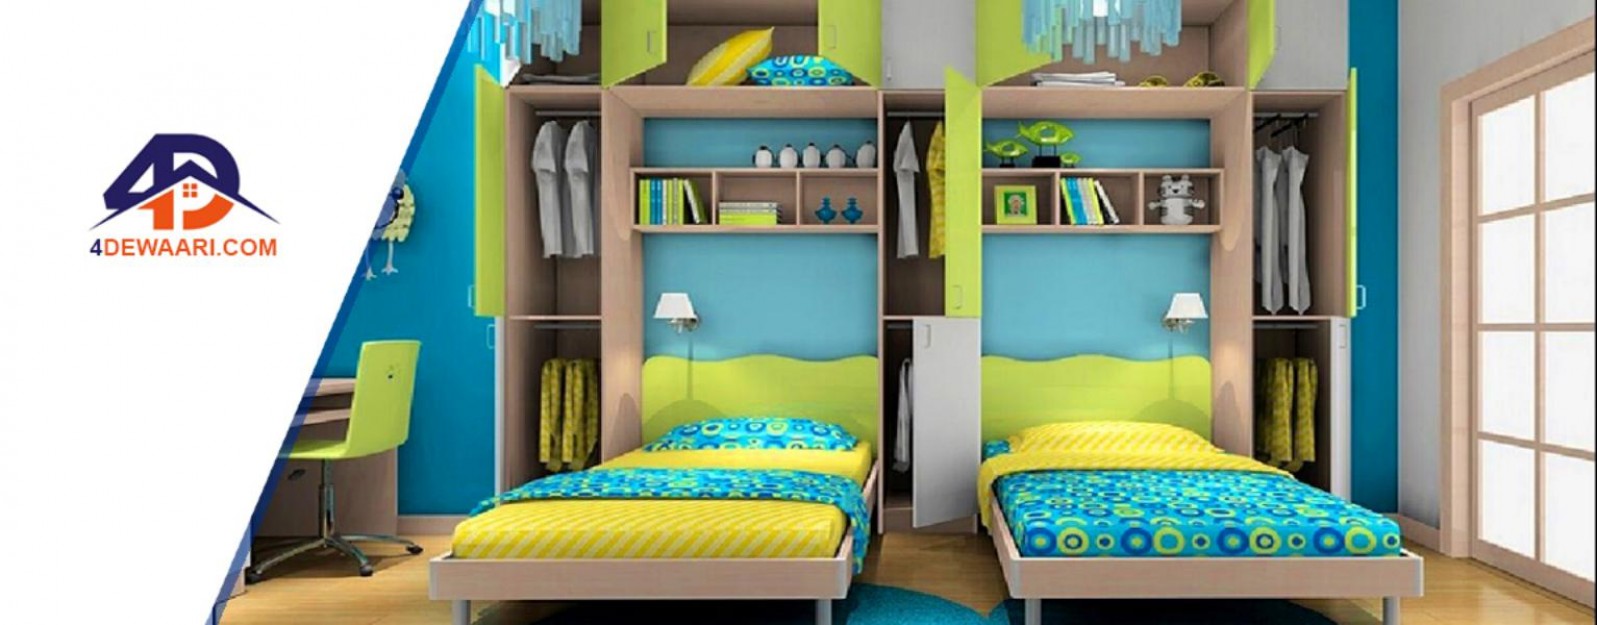 Most Popular Bed Designs for Kids 2021